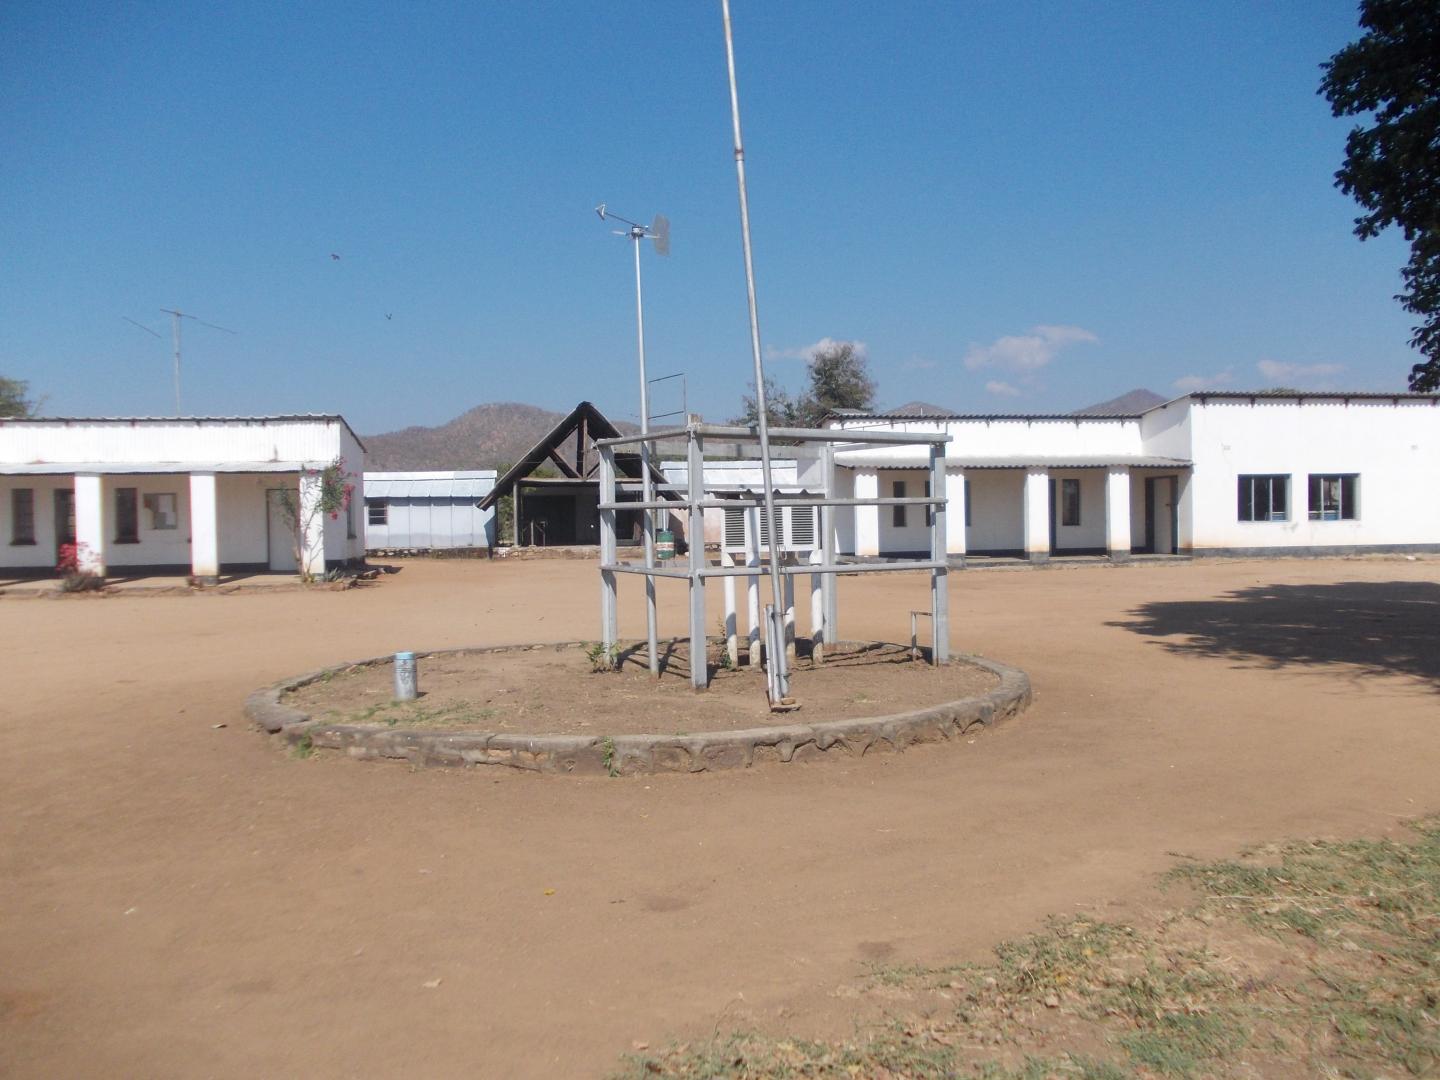 Rekomitjie Research Station, Zimbabwe